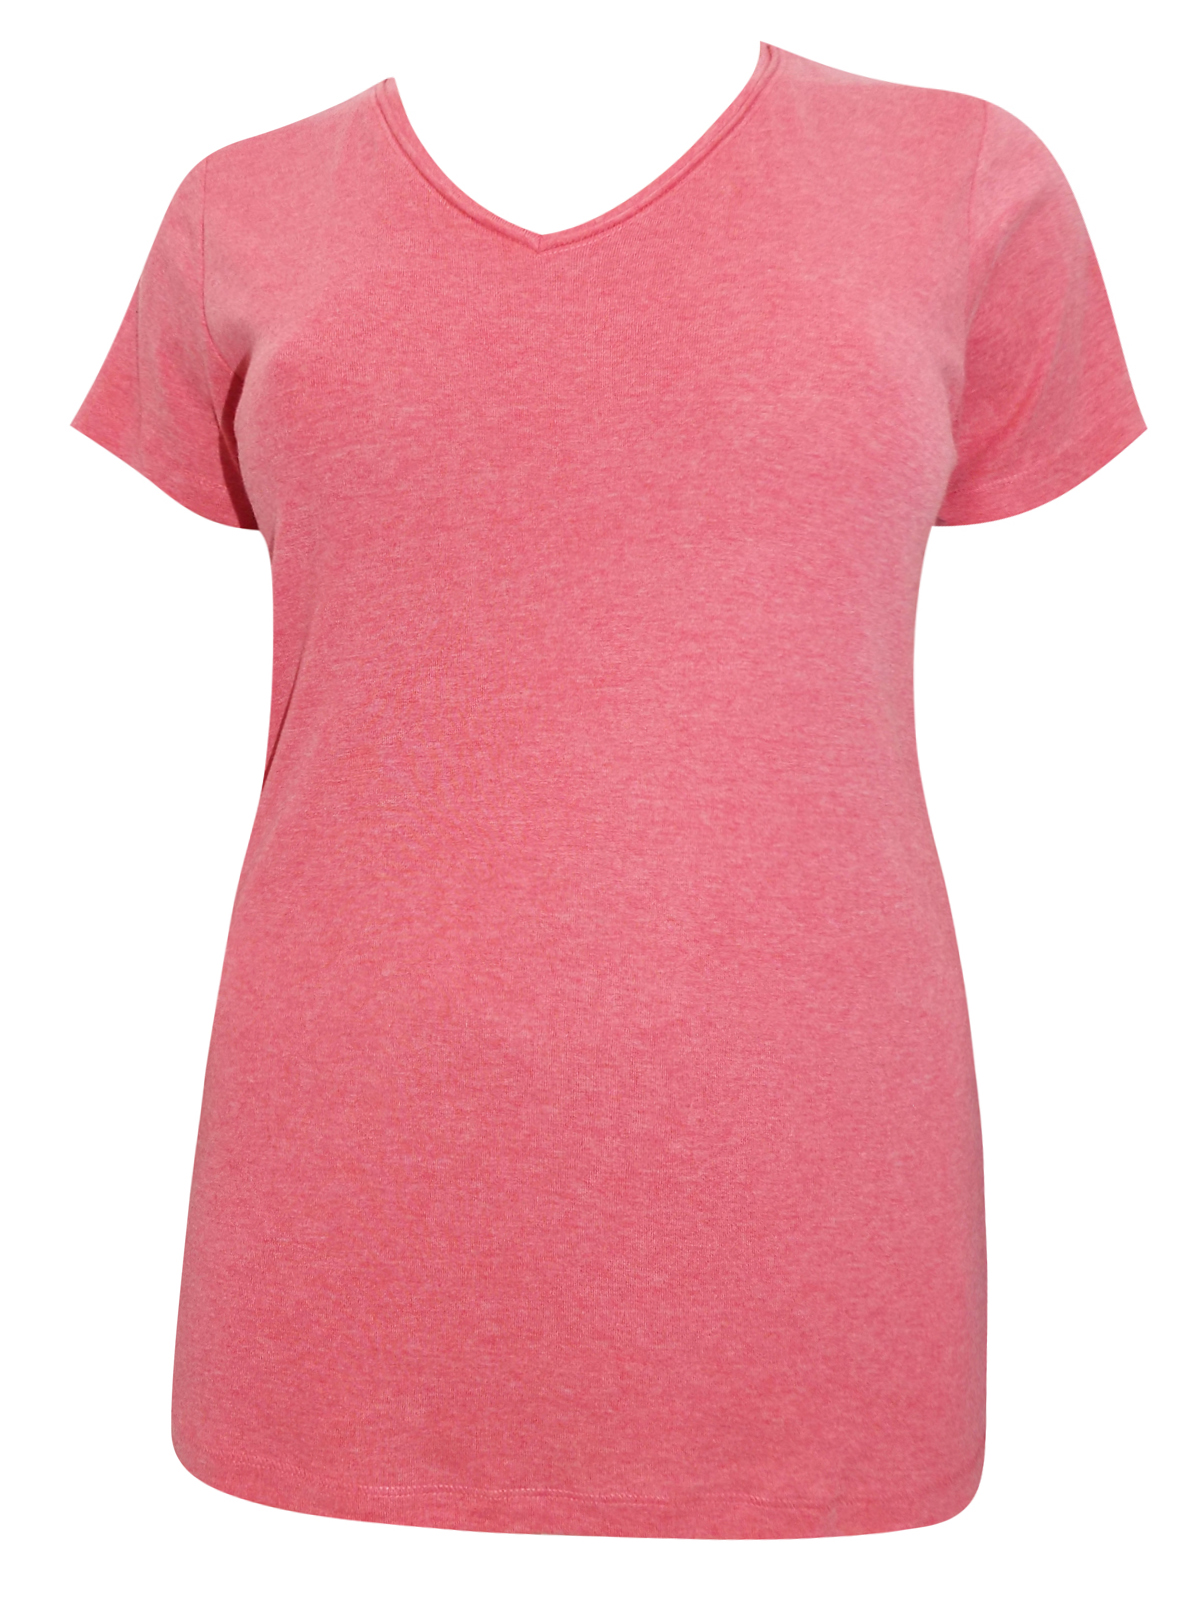 CURVE - - Yours ROSE Pure Cotton V-Neck Short Sleeve T-Shirt - Plus ...